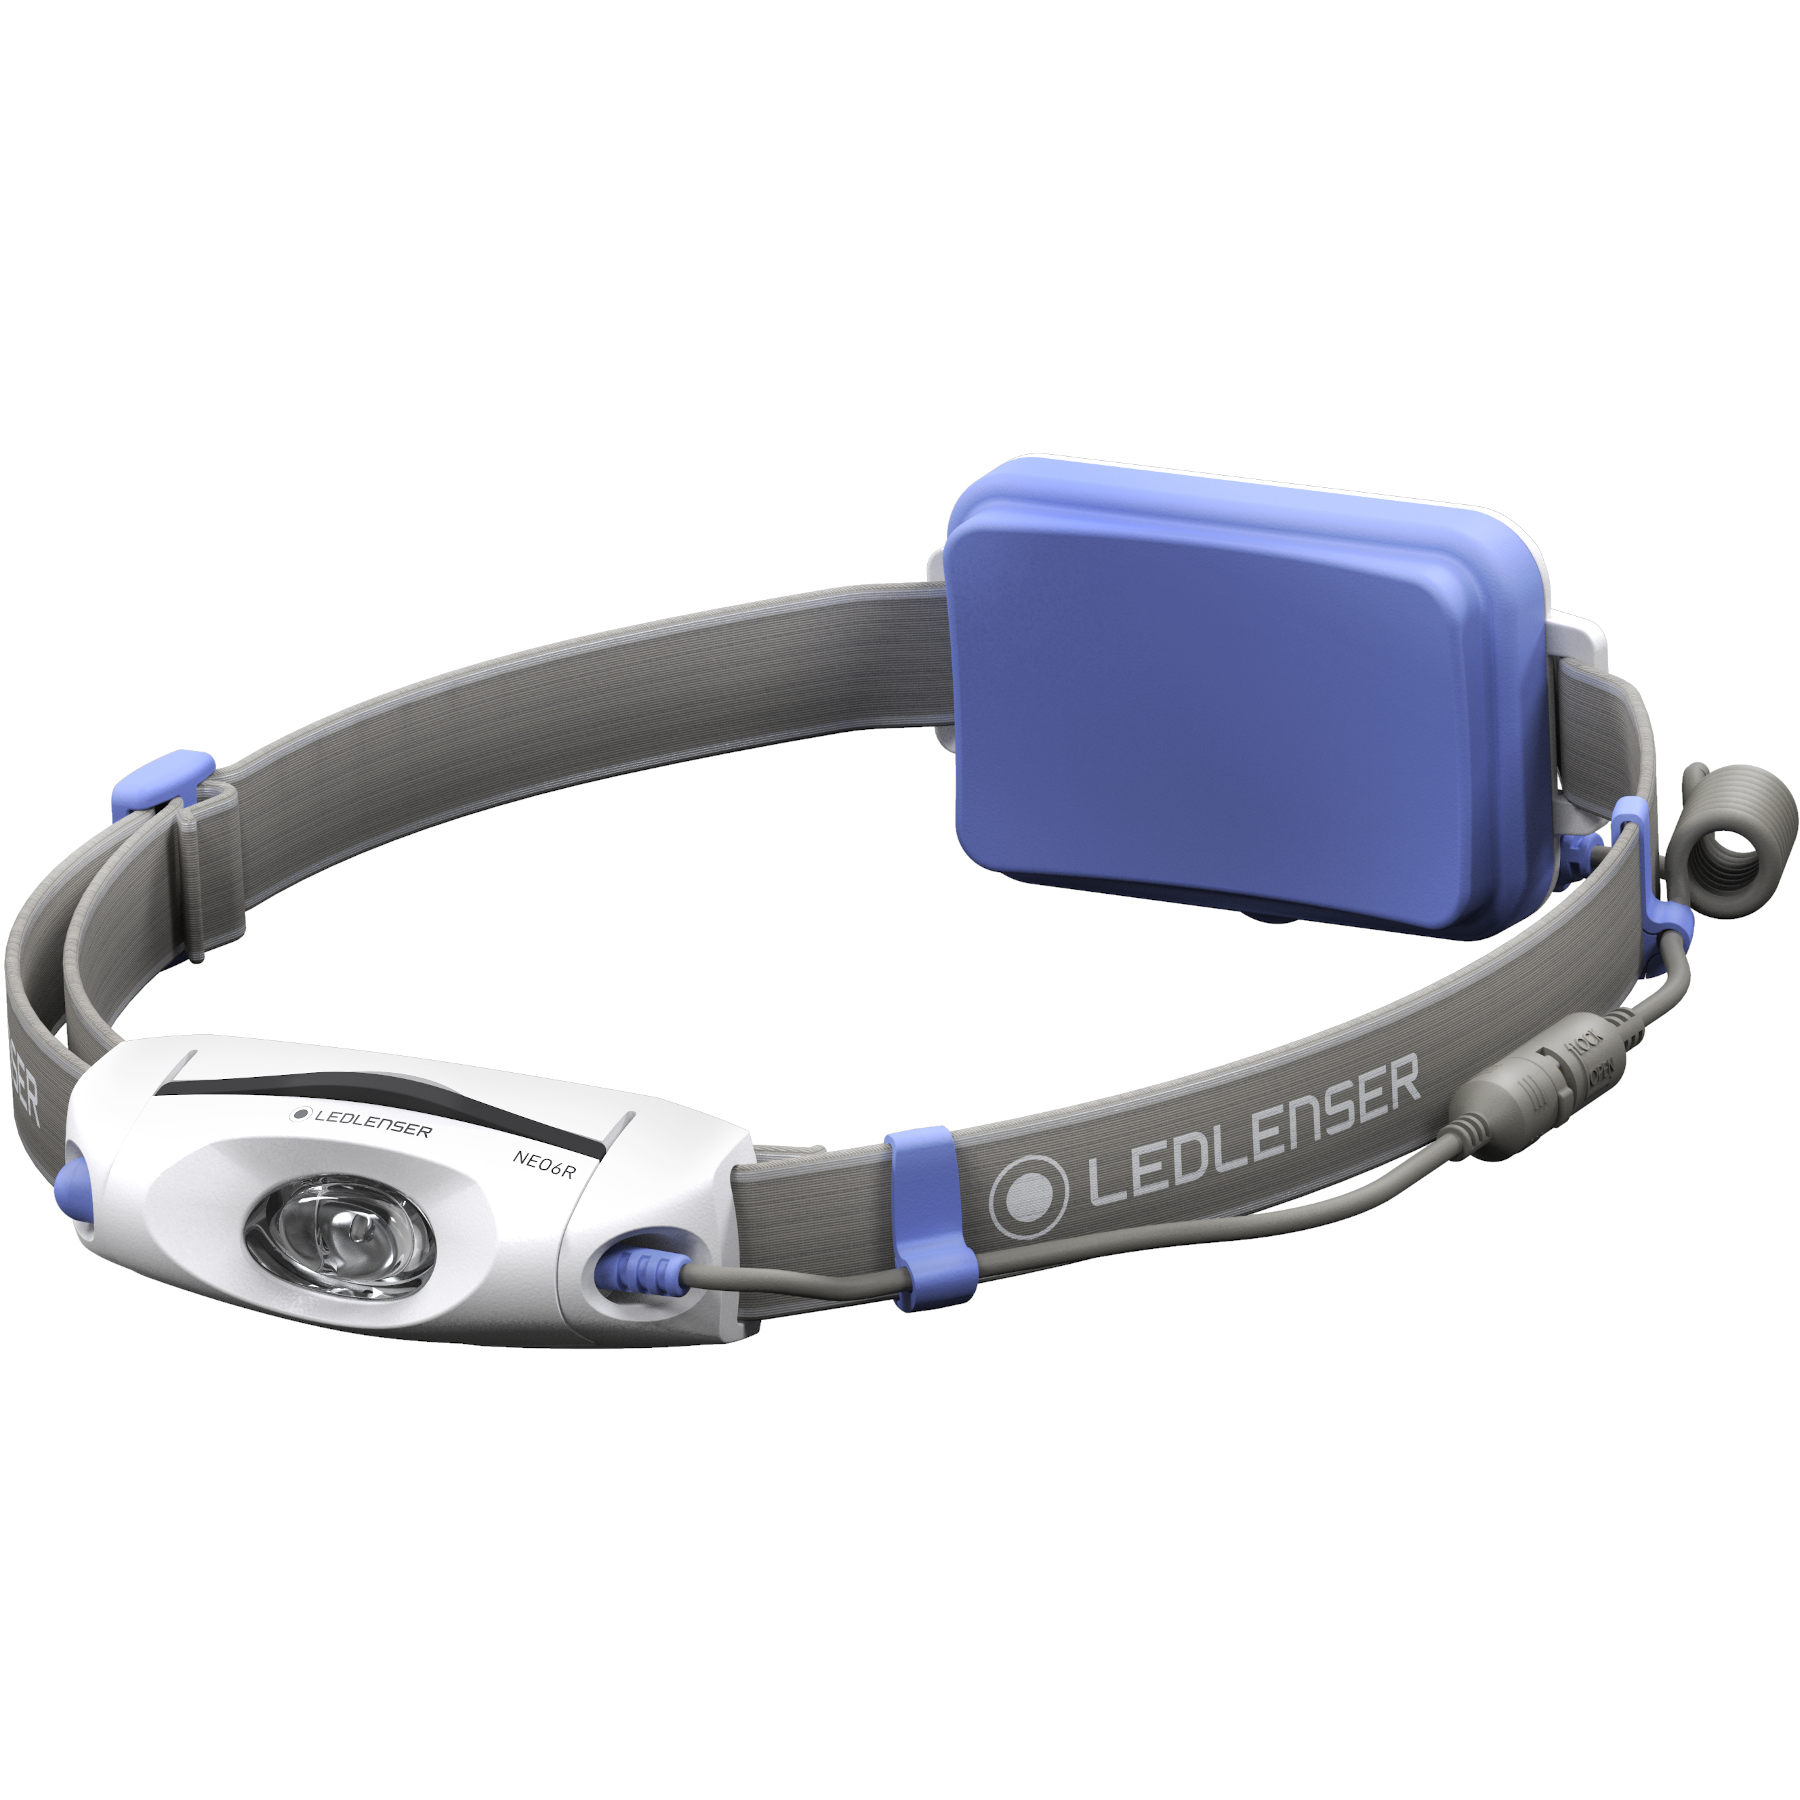 Productfoto van LEDLENSER NEO6R Headlamp - Blue